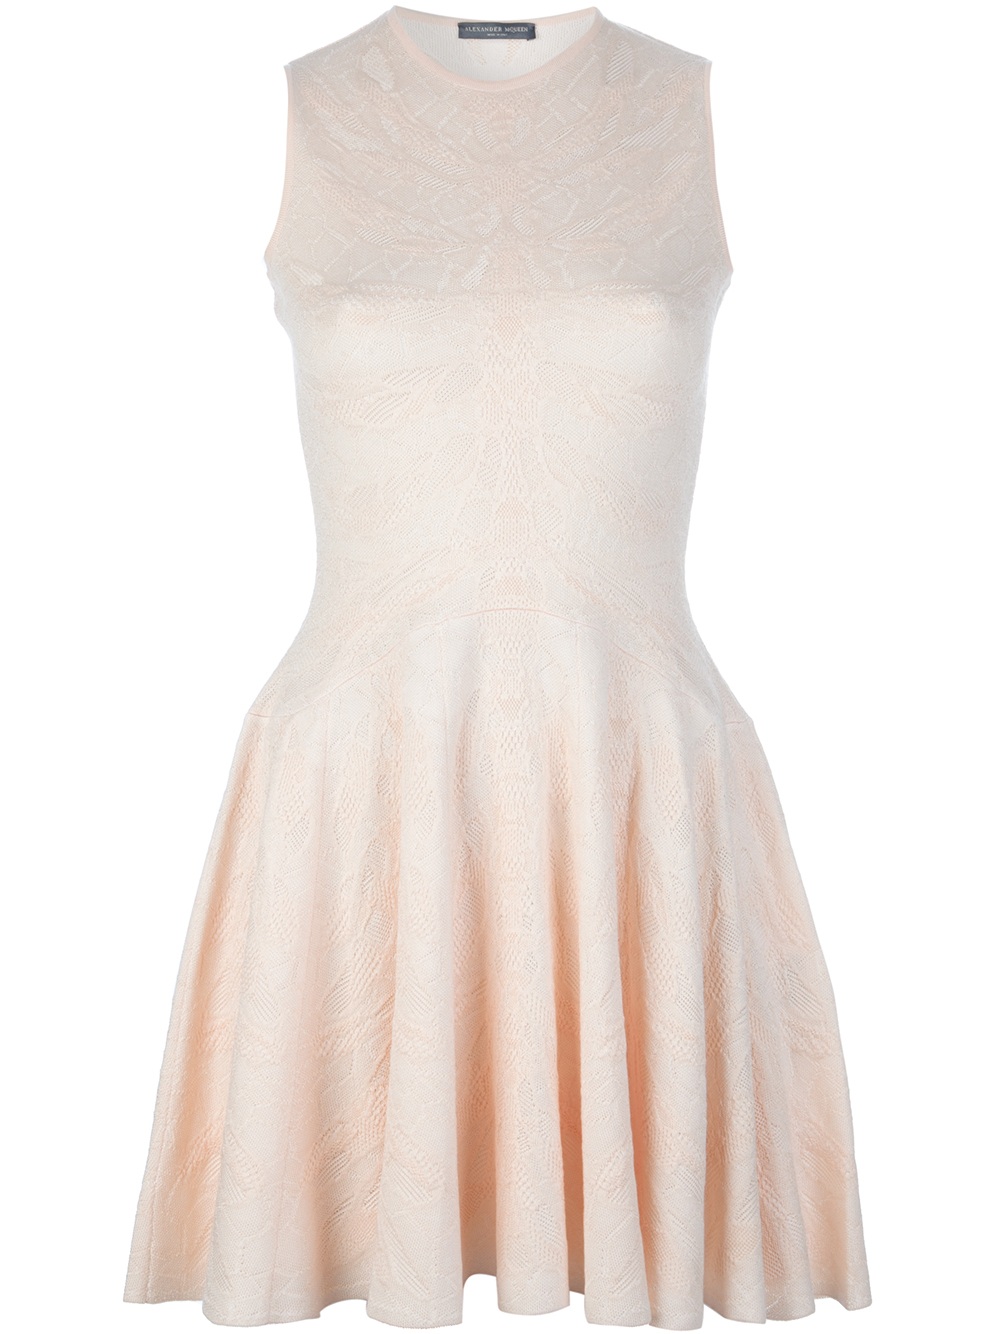 Alexander McQueen Texture Sleeveless Dress in Ivory (White) - Lyst